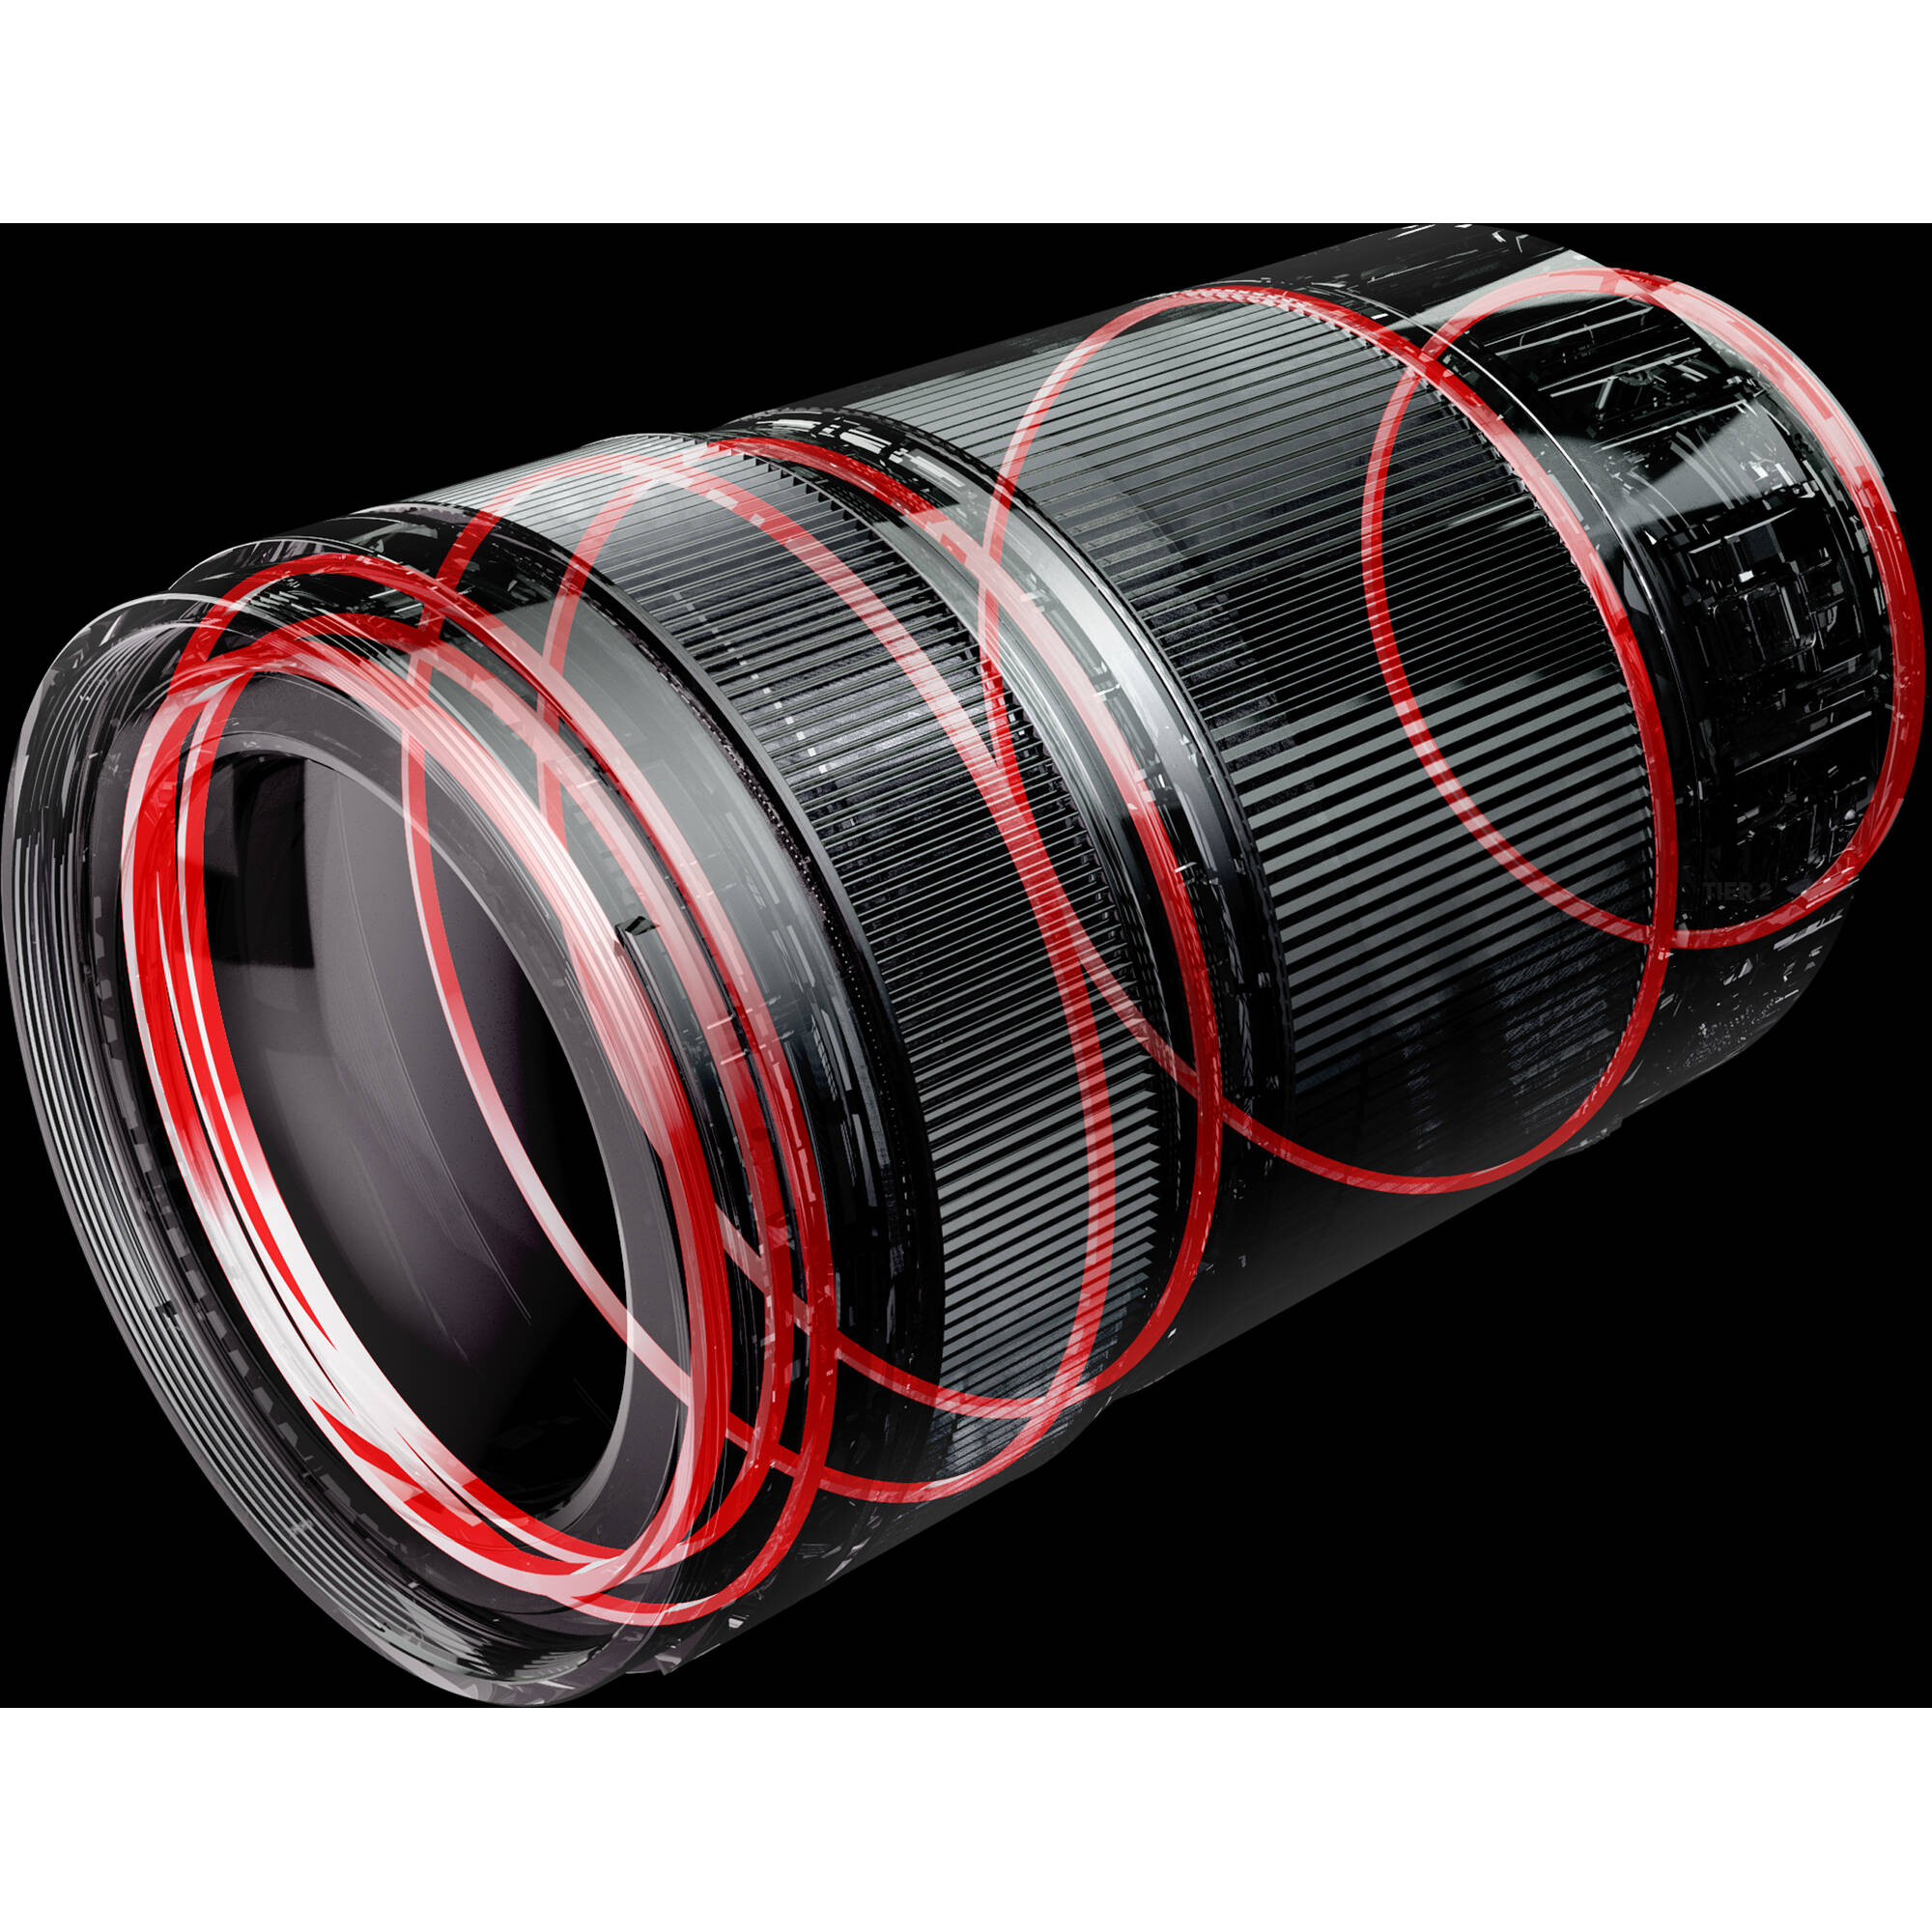 Panasonic Lumix S 70-300mm f/4.5-5.6 MACRO O.I.S. Lens